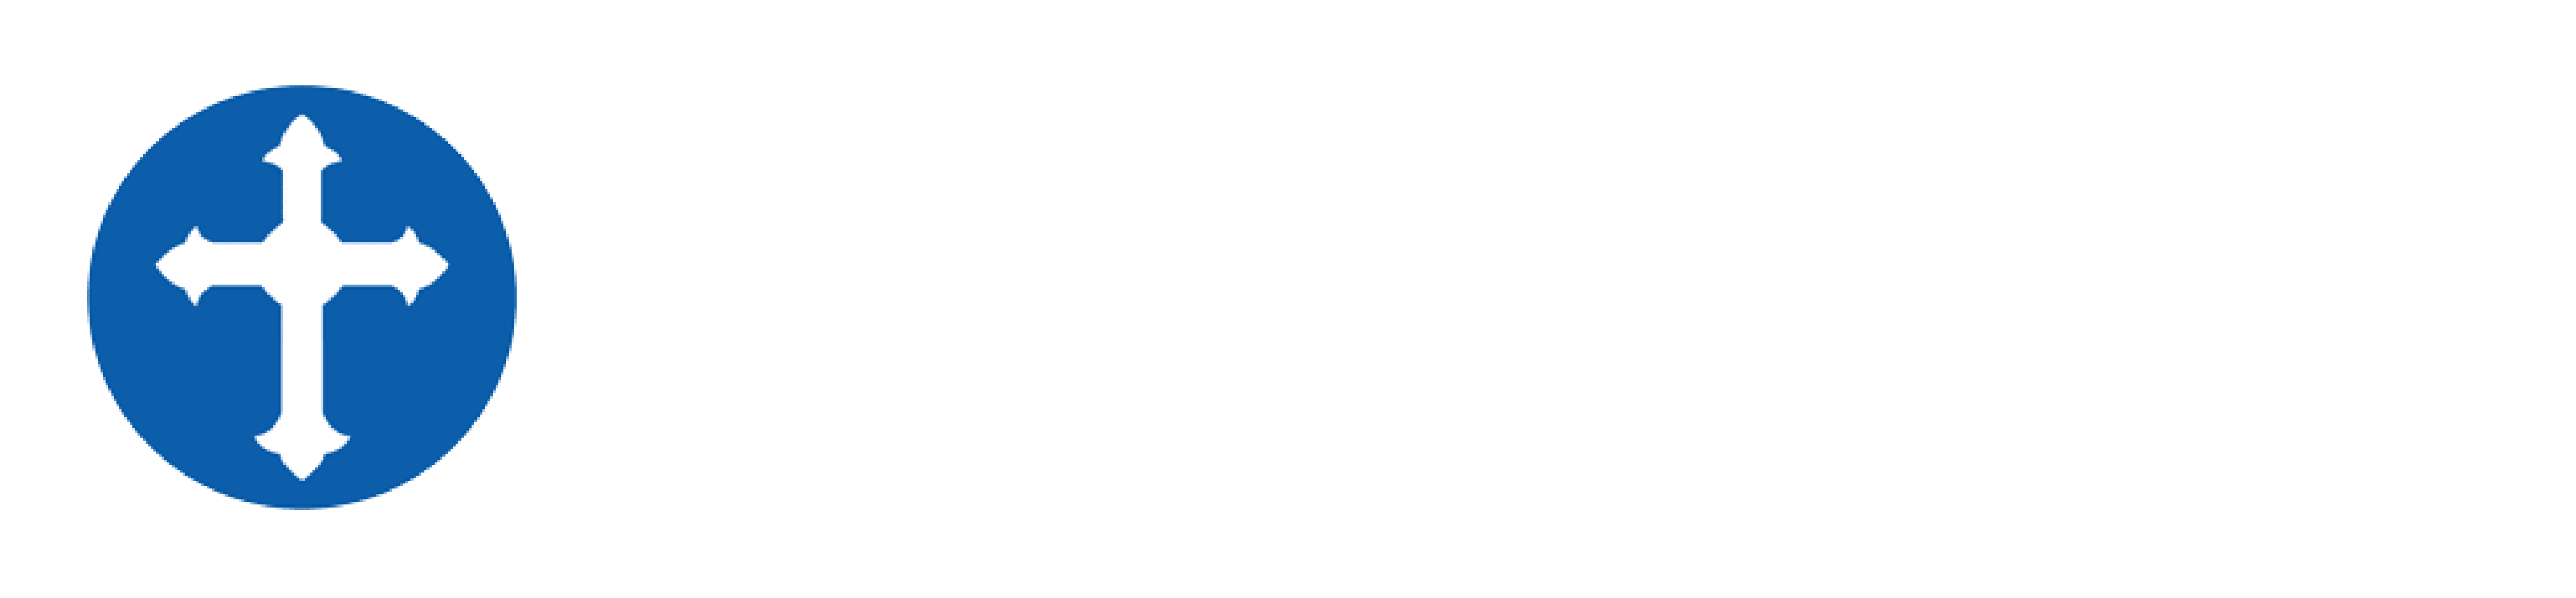 Catholic Lawyers Guild of Central Florida